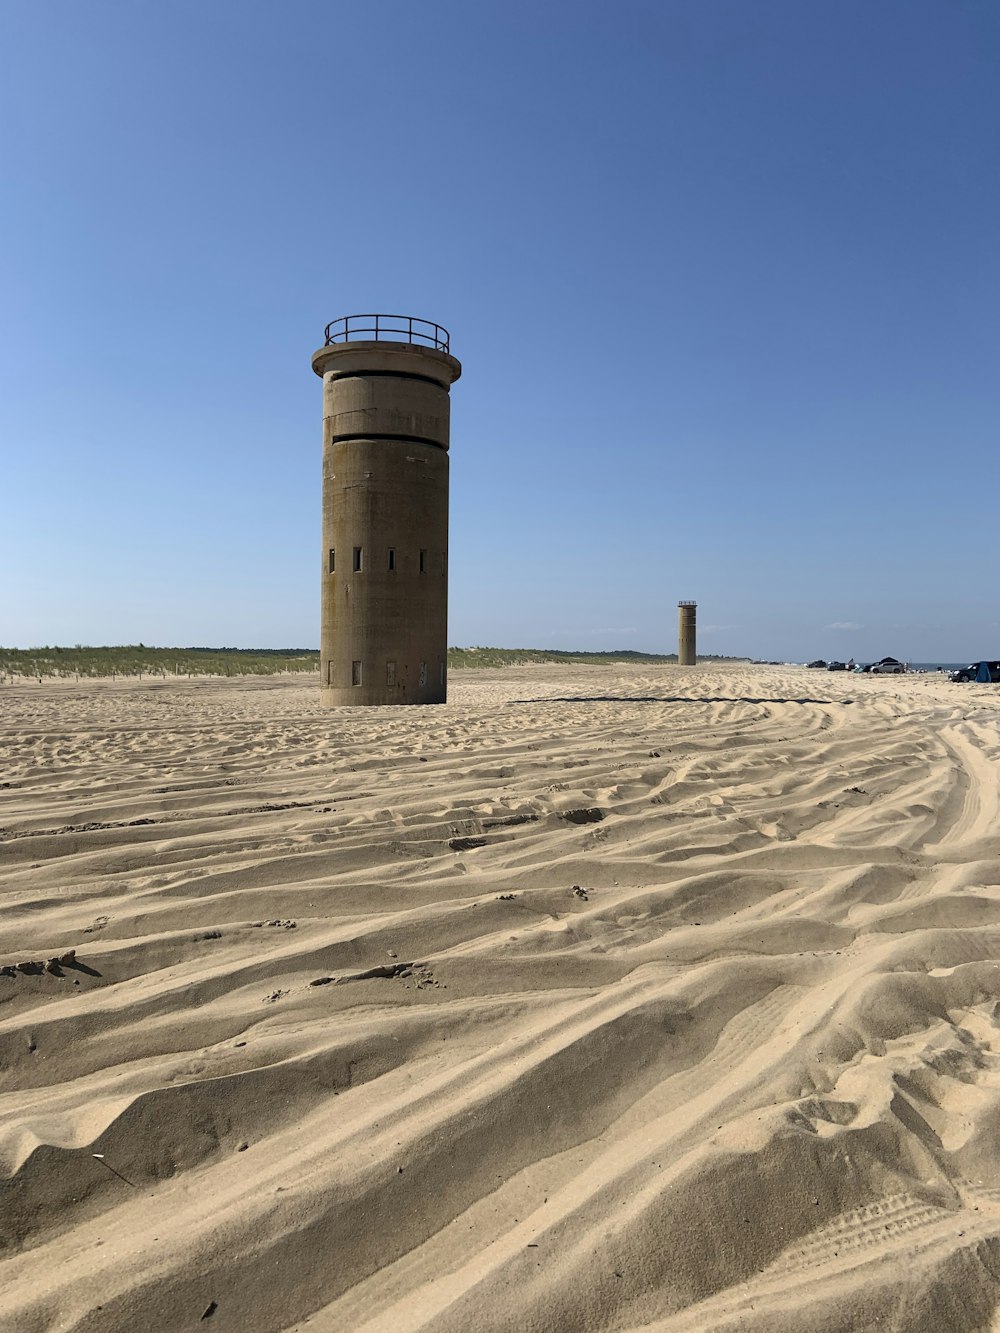 Brauner Betonturm tagsüber auf braunem Sand unter blauem Himmel